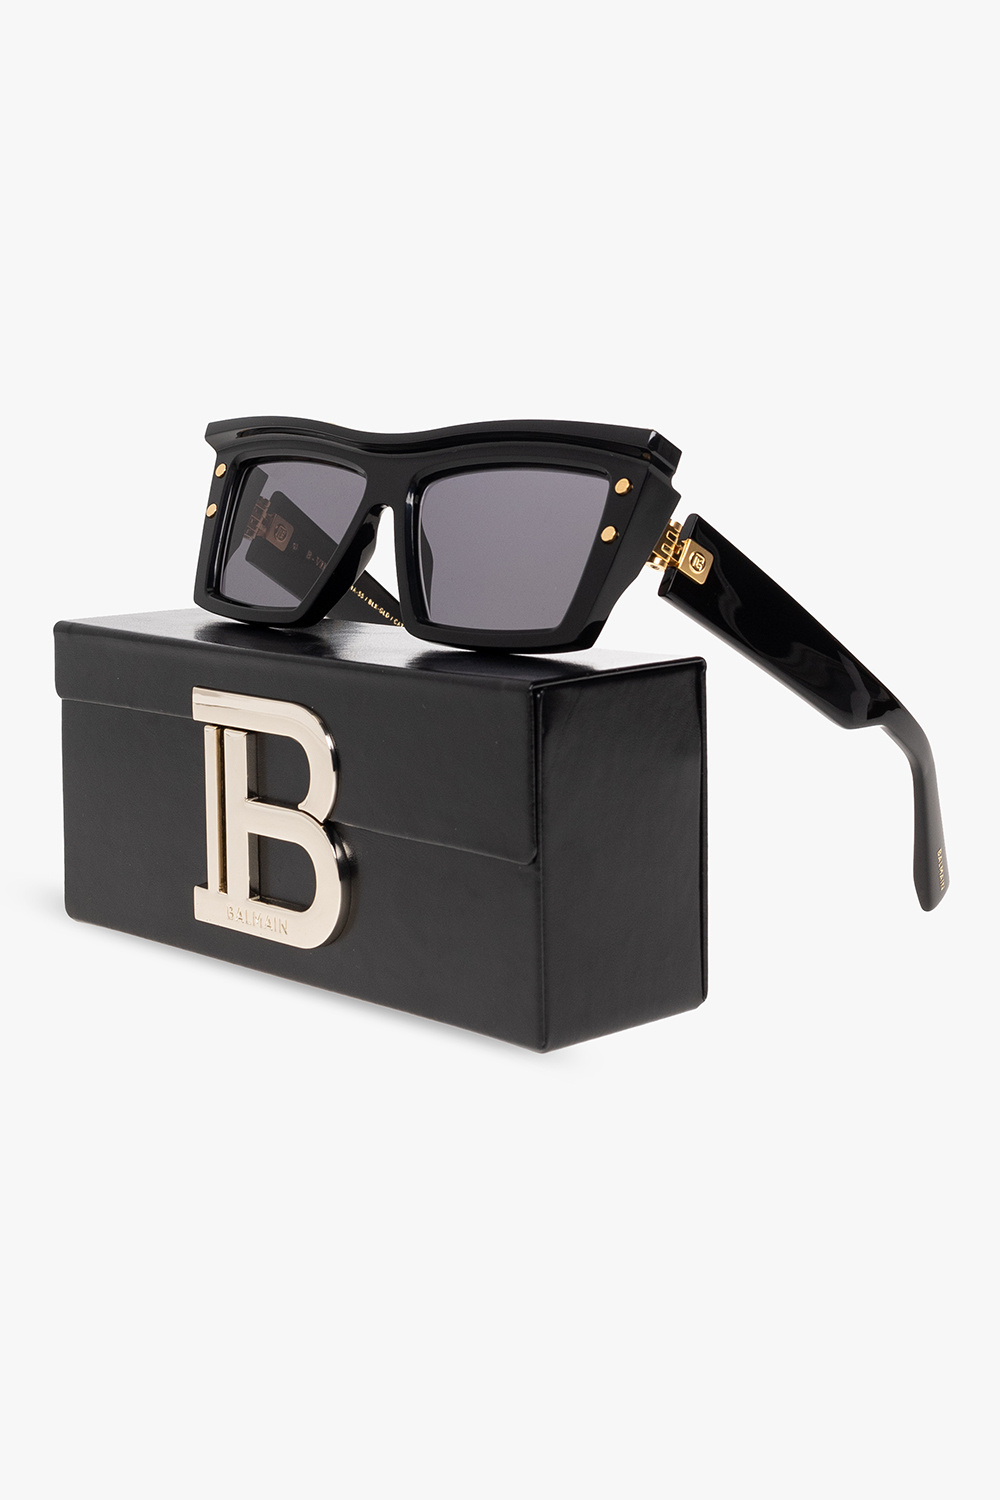 Balmain ‘B-VII’ amp sunglasses